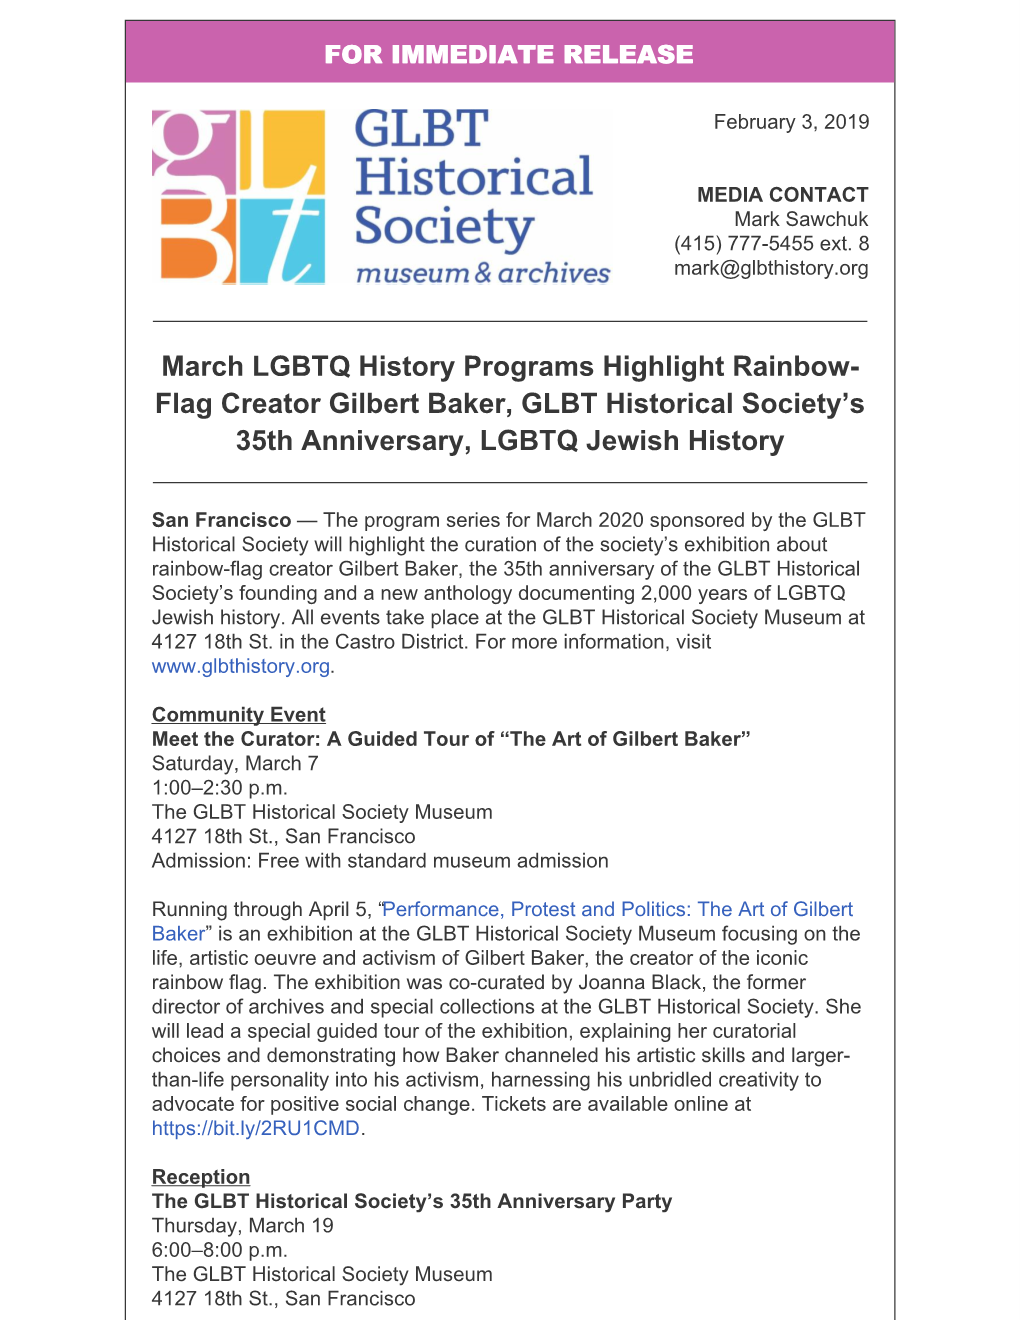 March LGBTQ History Programs Highlight Rainbow- Flag Creator Gilbert Baker, GLBT Historical Society’S 35Th Anniversary, LGBTQ Jewish History